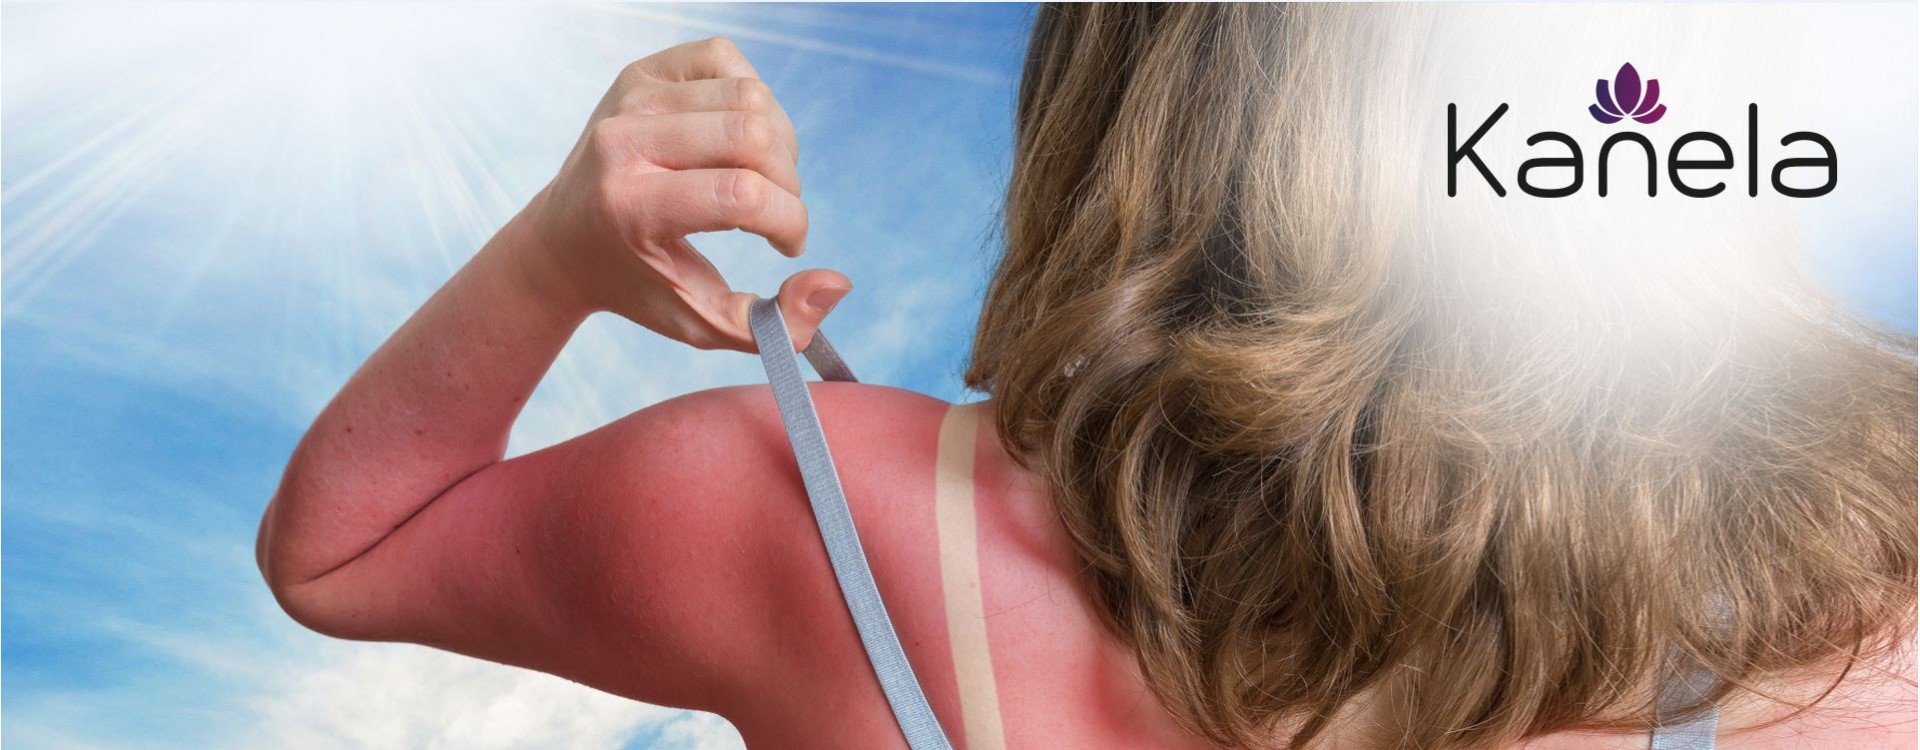 What to do against sunburn